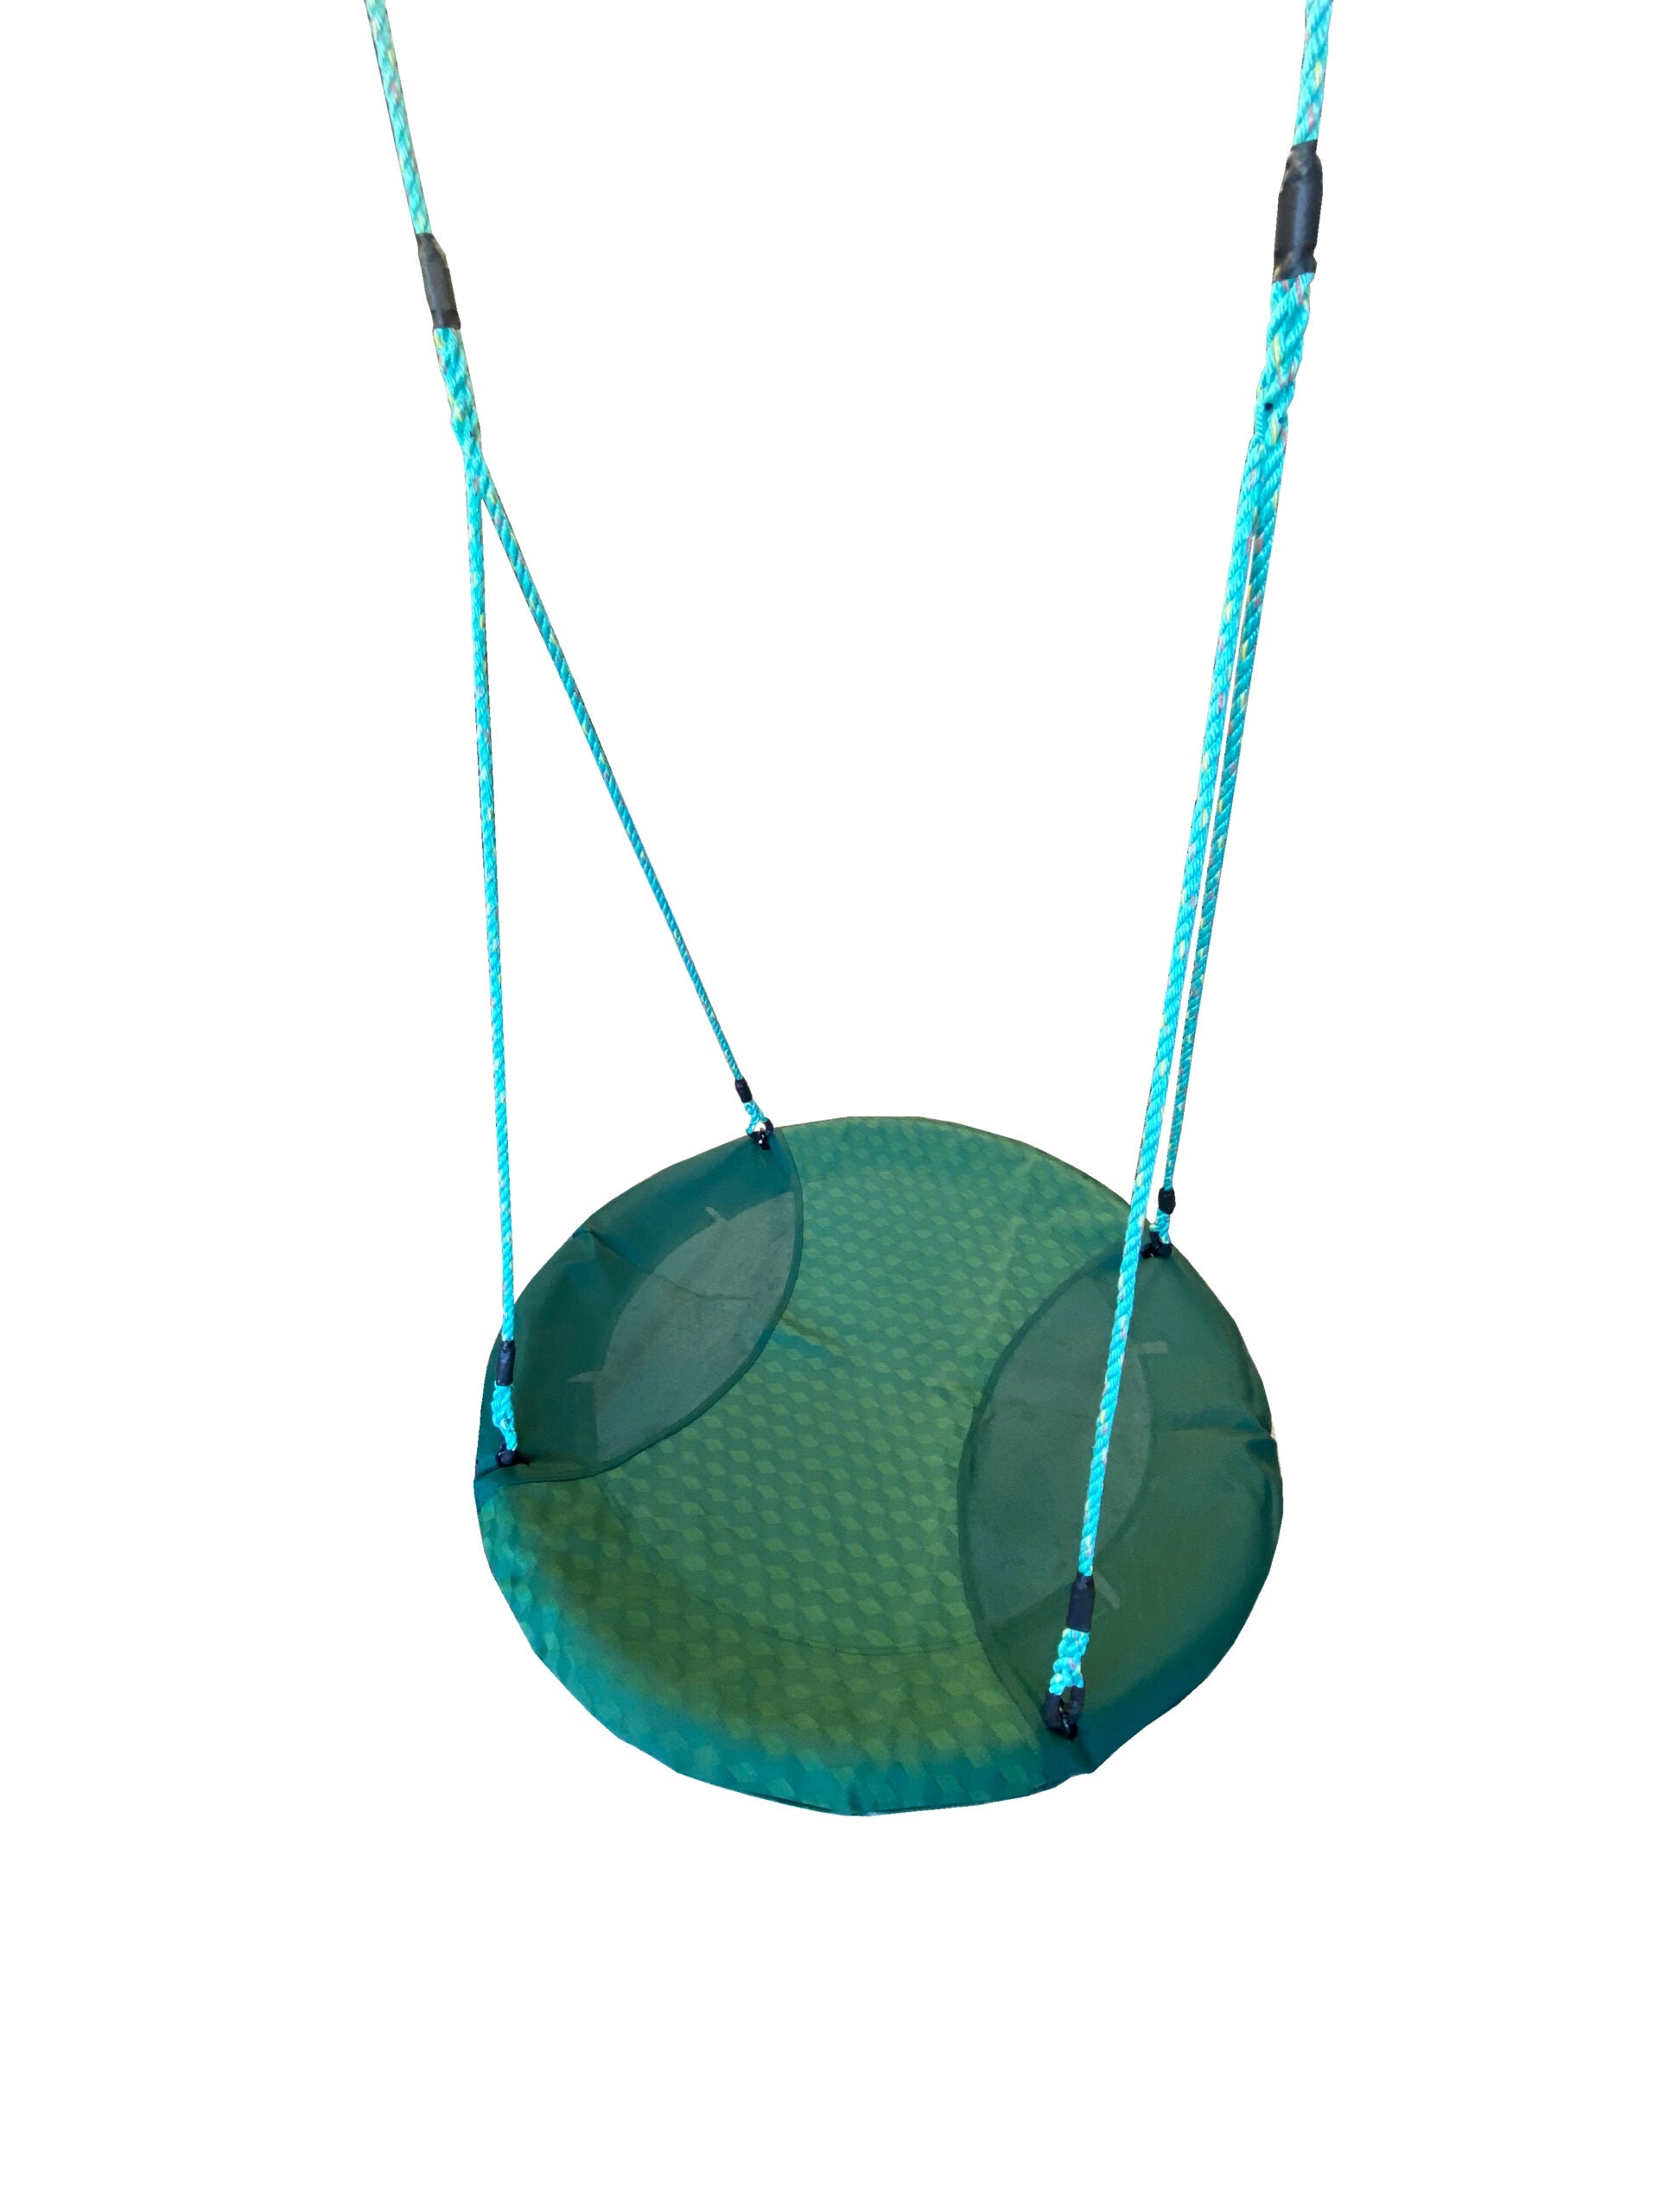 Nest Swing – Sensory Swing 1m Assembled